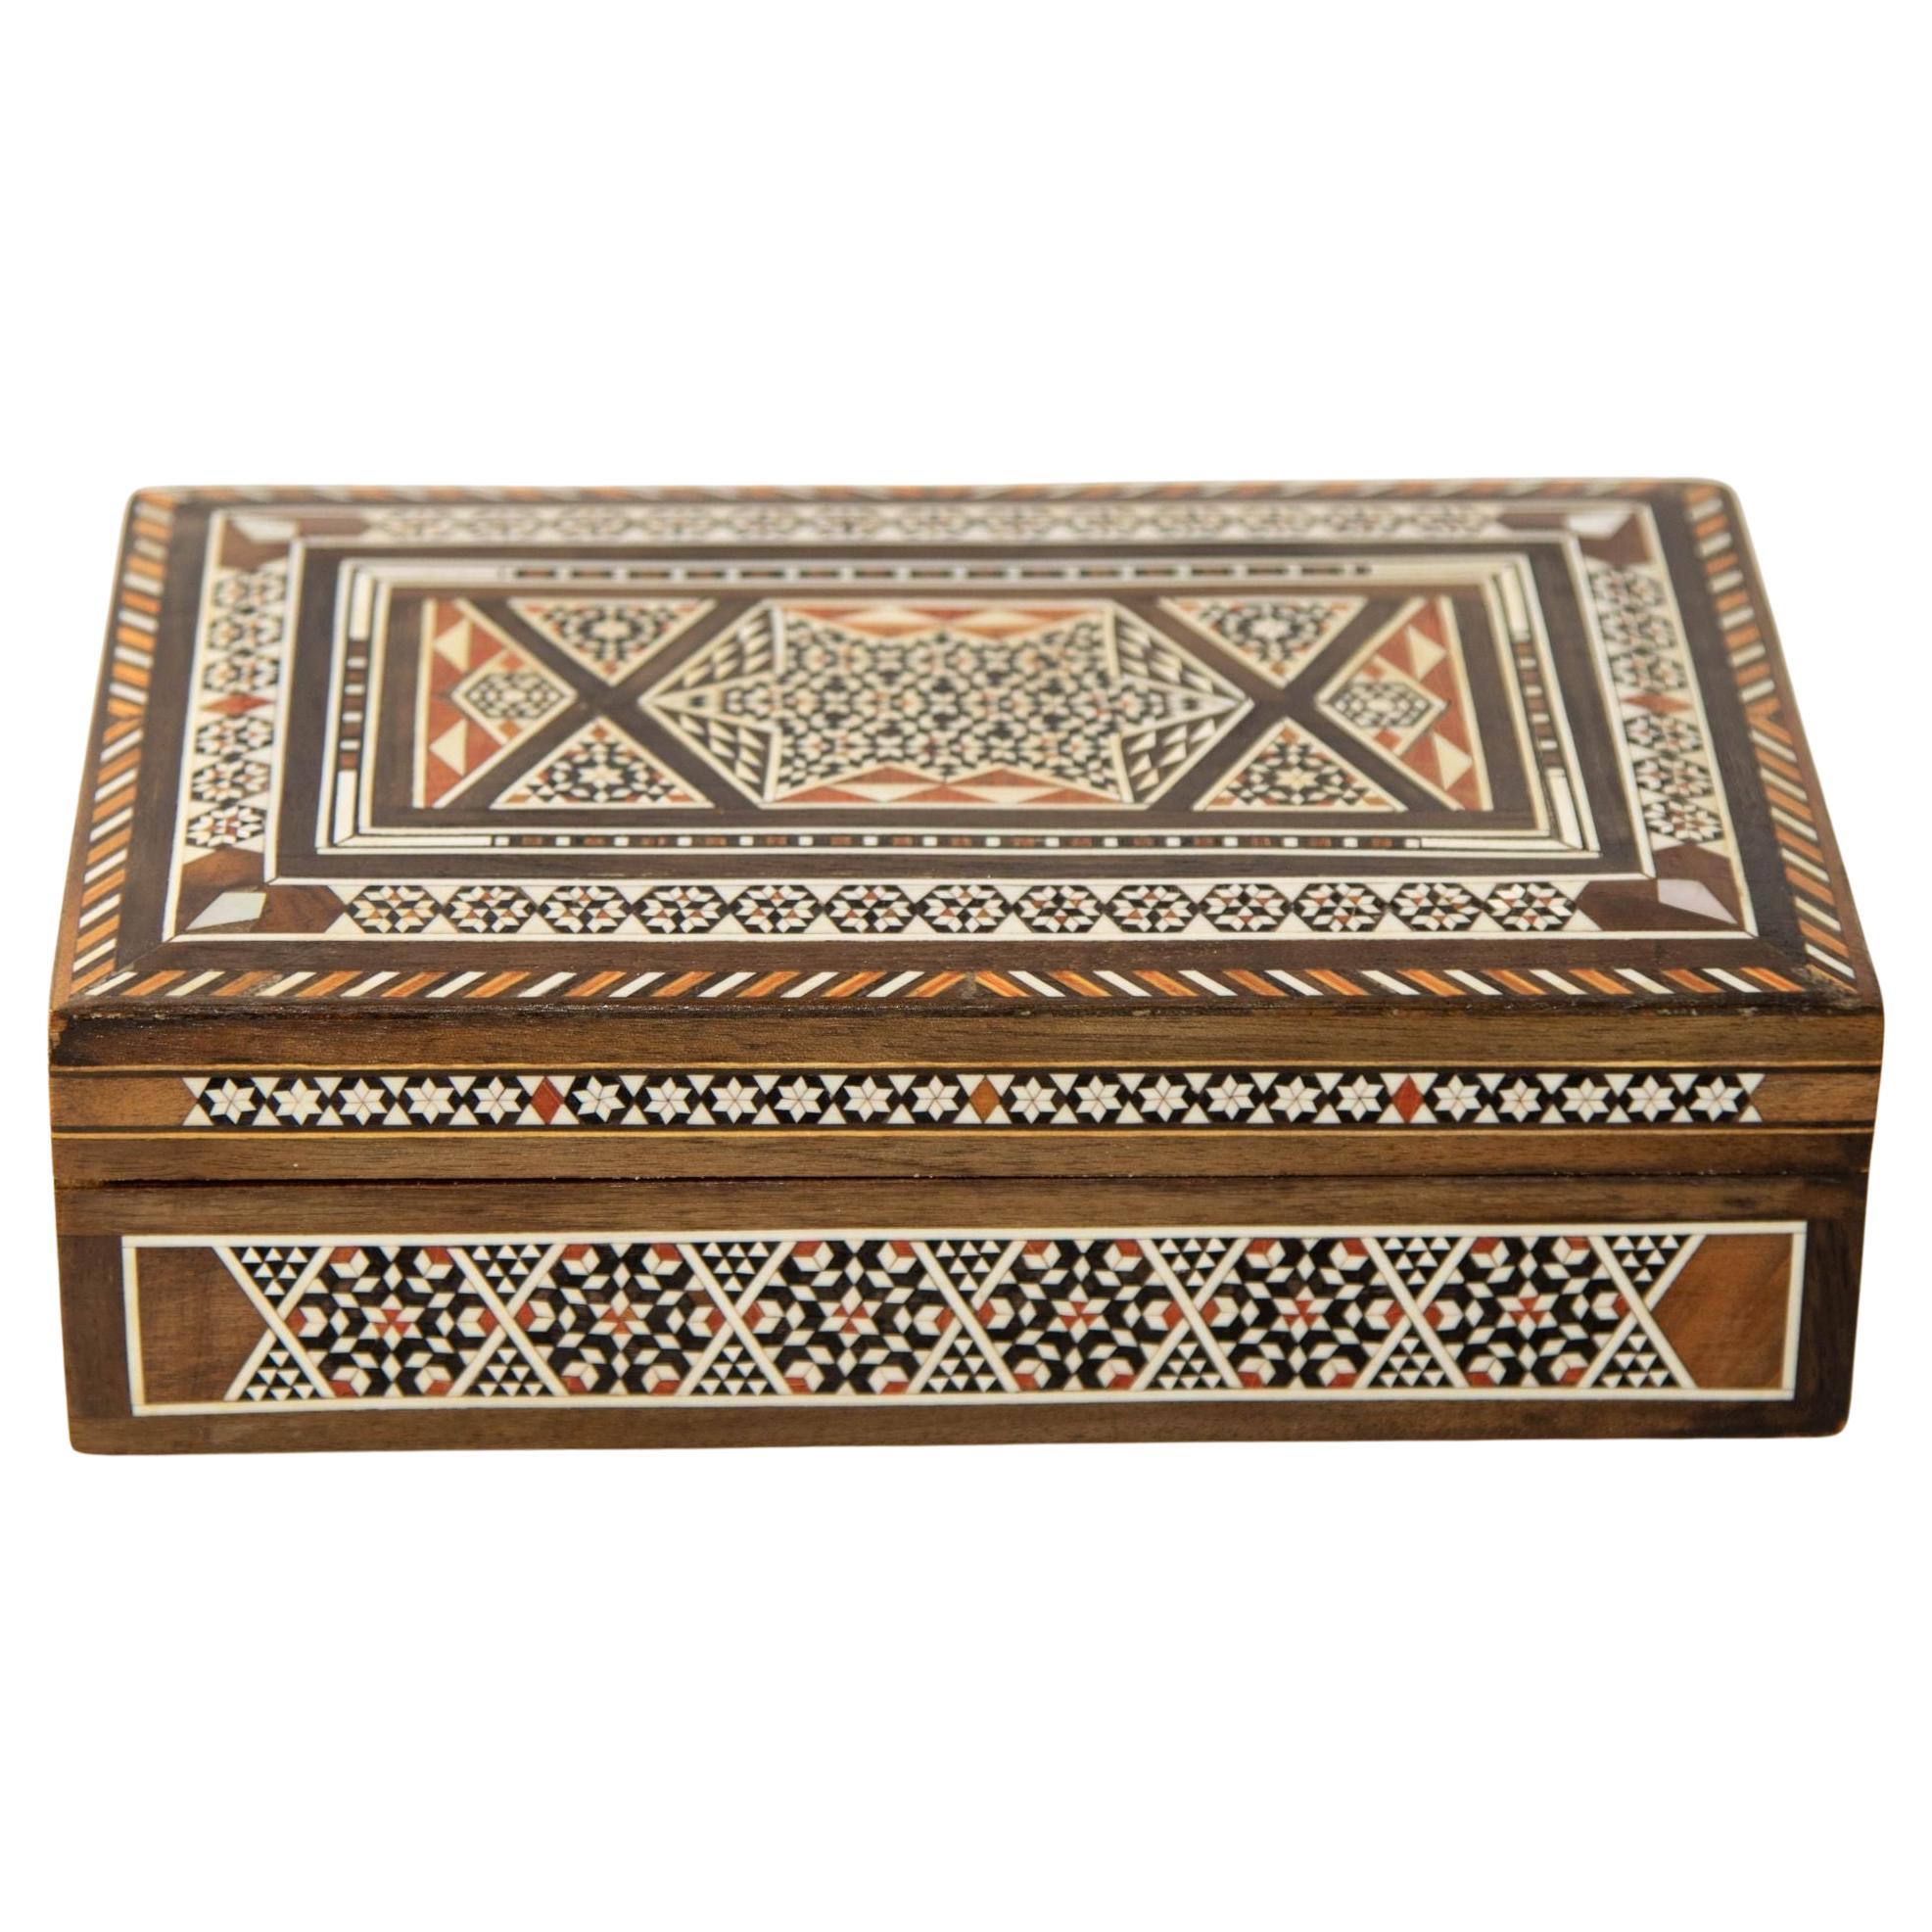 1950s Large Decorative Middle Eastern Islamic Moorish Box For Sale